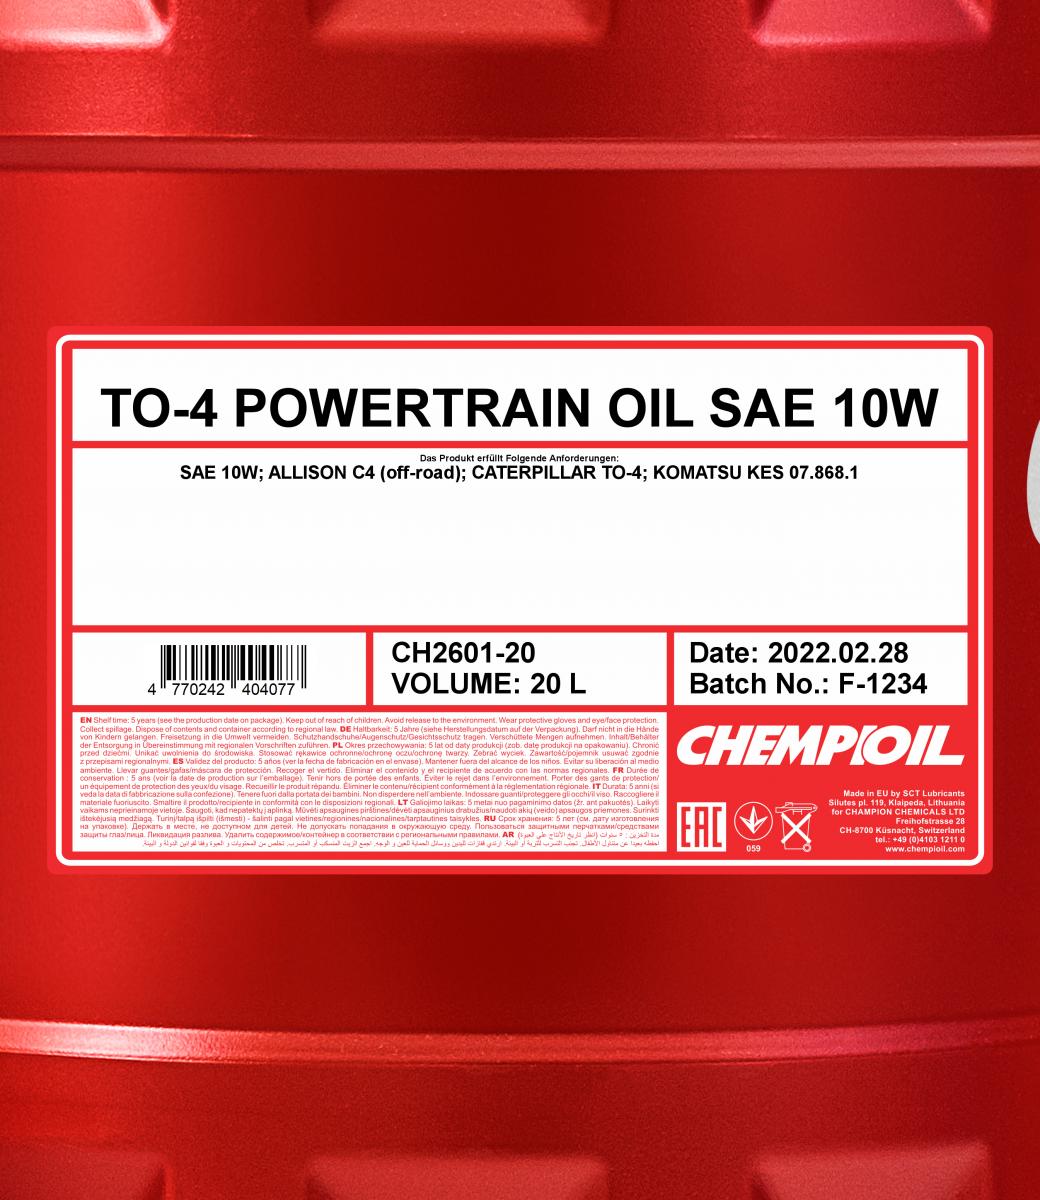 Chempioil 2601 TO-4 Powertrain Oil SAE 10W 20L